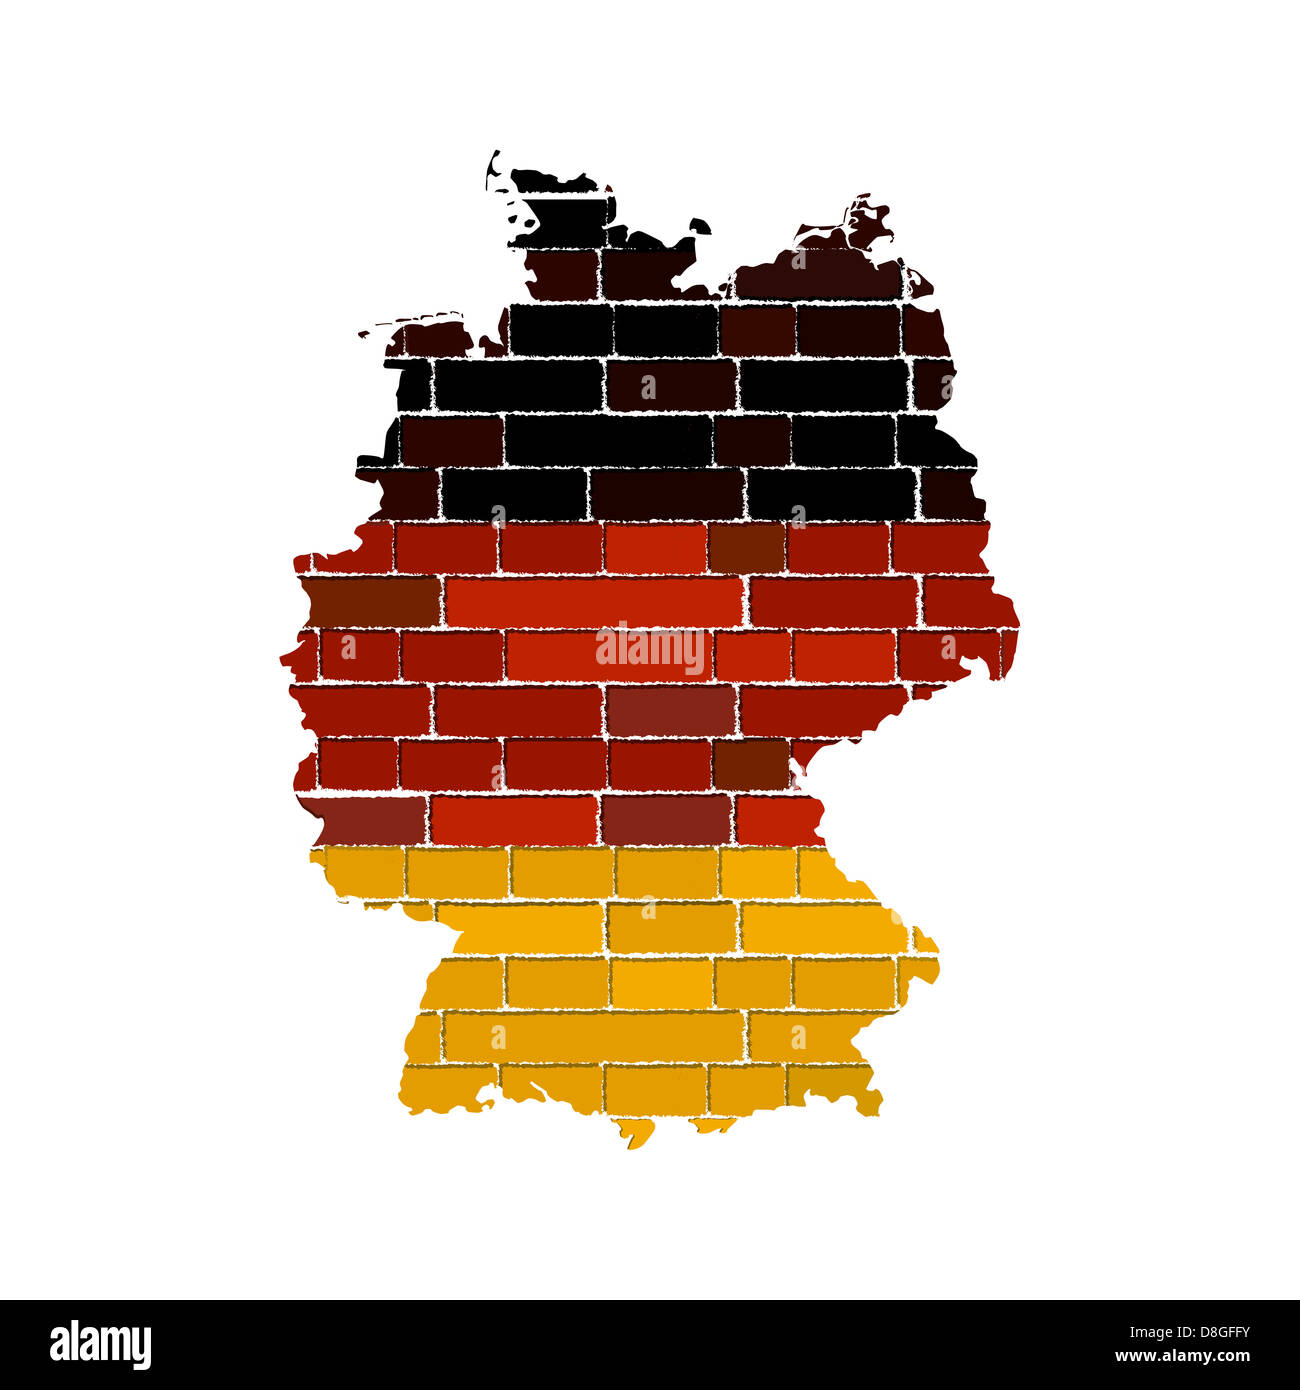 Grunge germany map Stock Photo